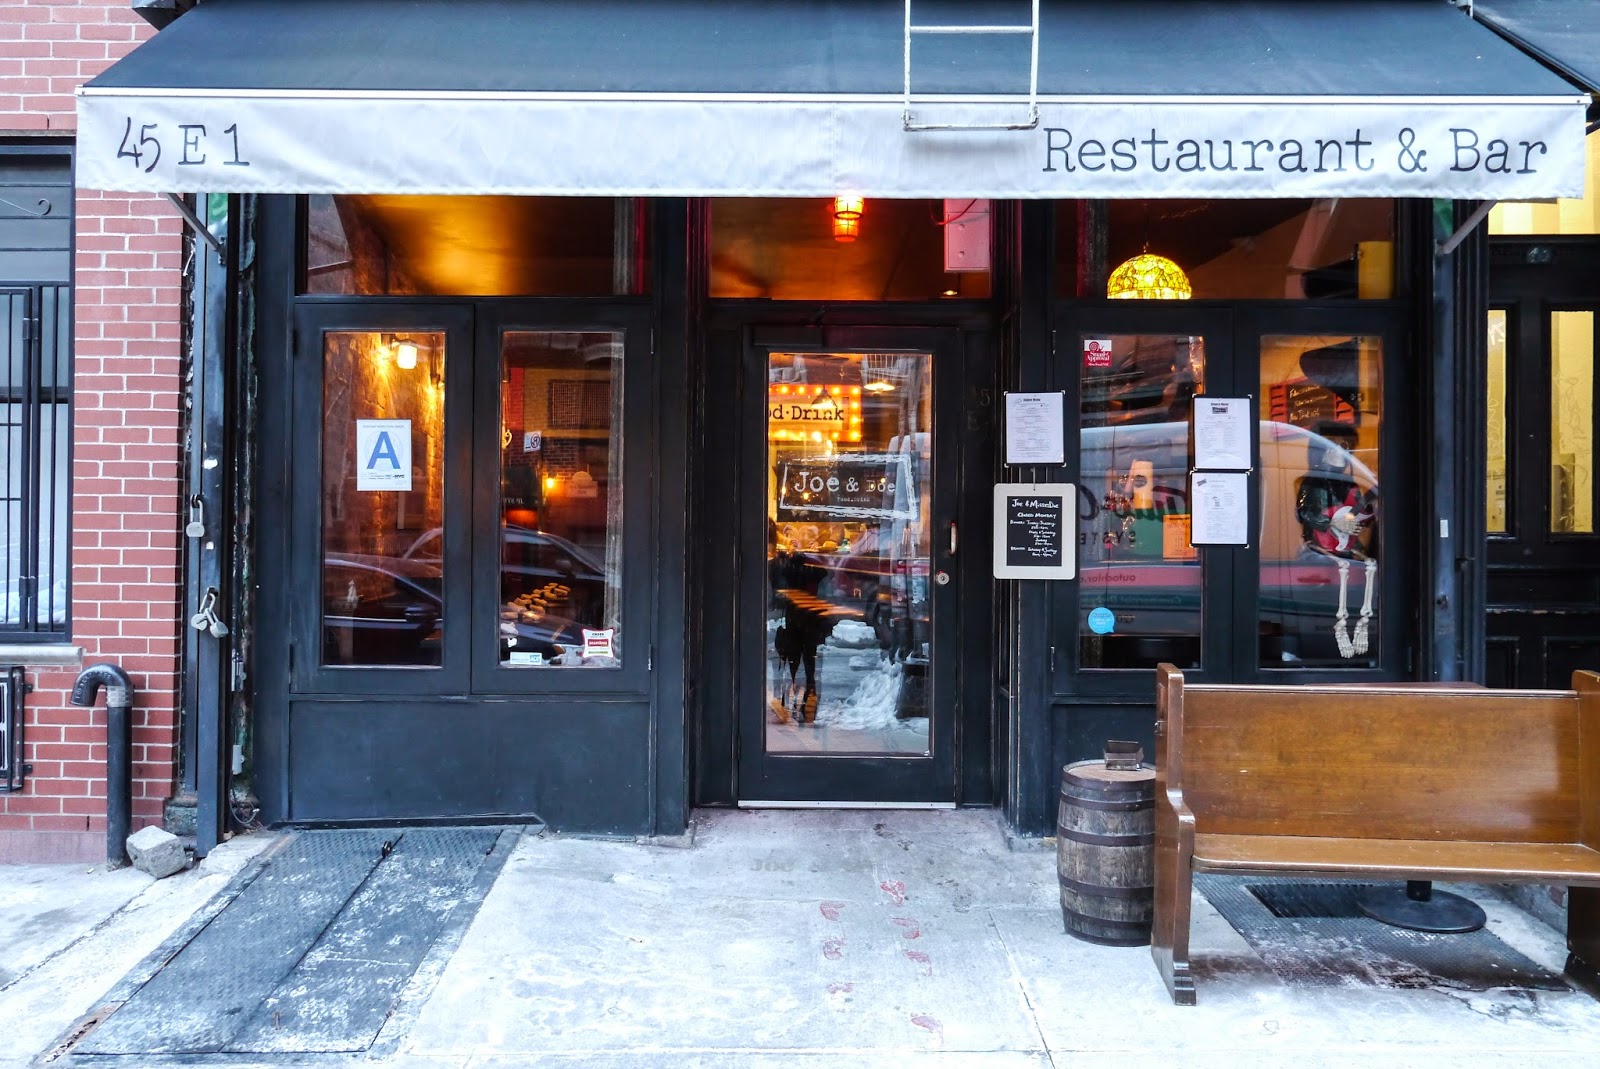 Photo of Joe & MissesDoe in New York City, New York, United States - 2 Picture of Restaurant, Food, Point of interest, Establishment, Bar